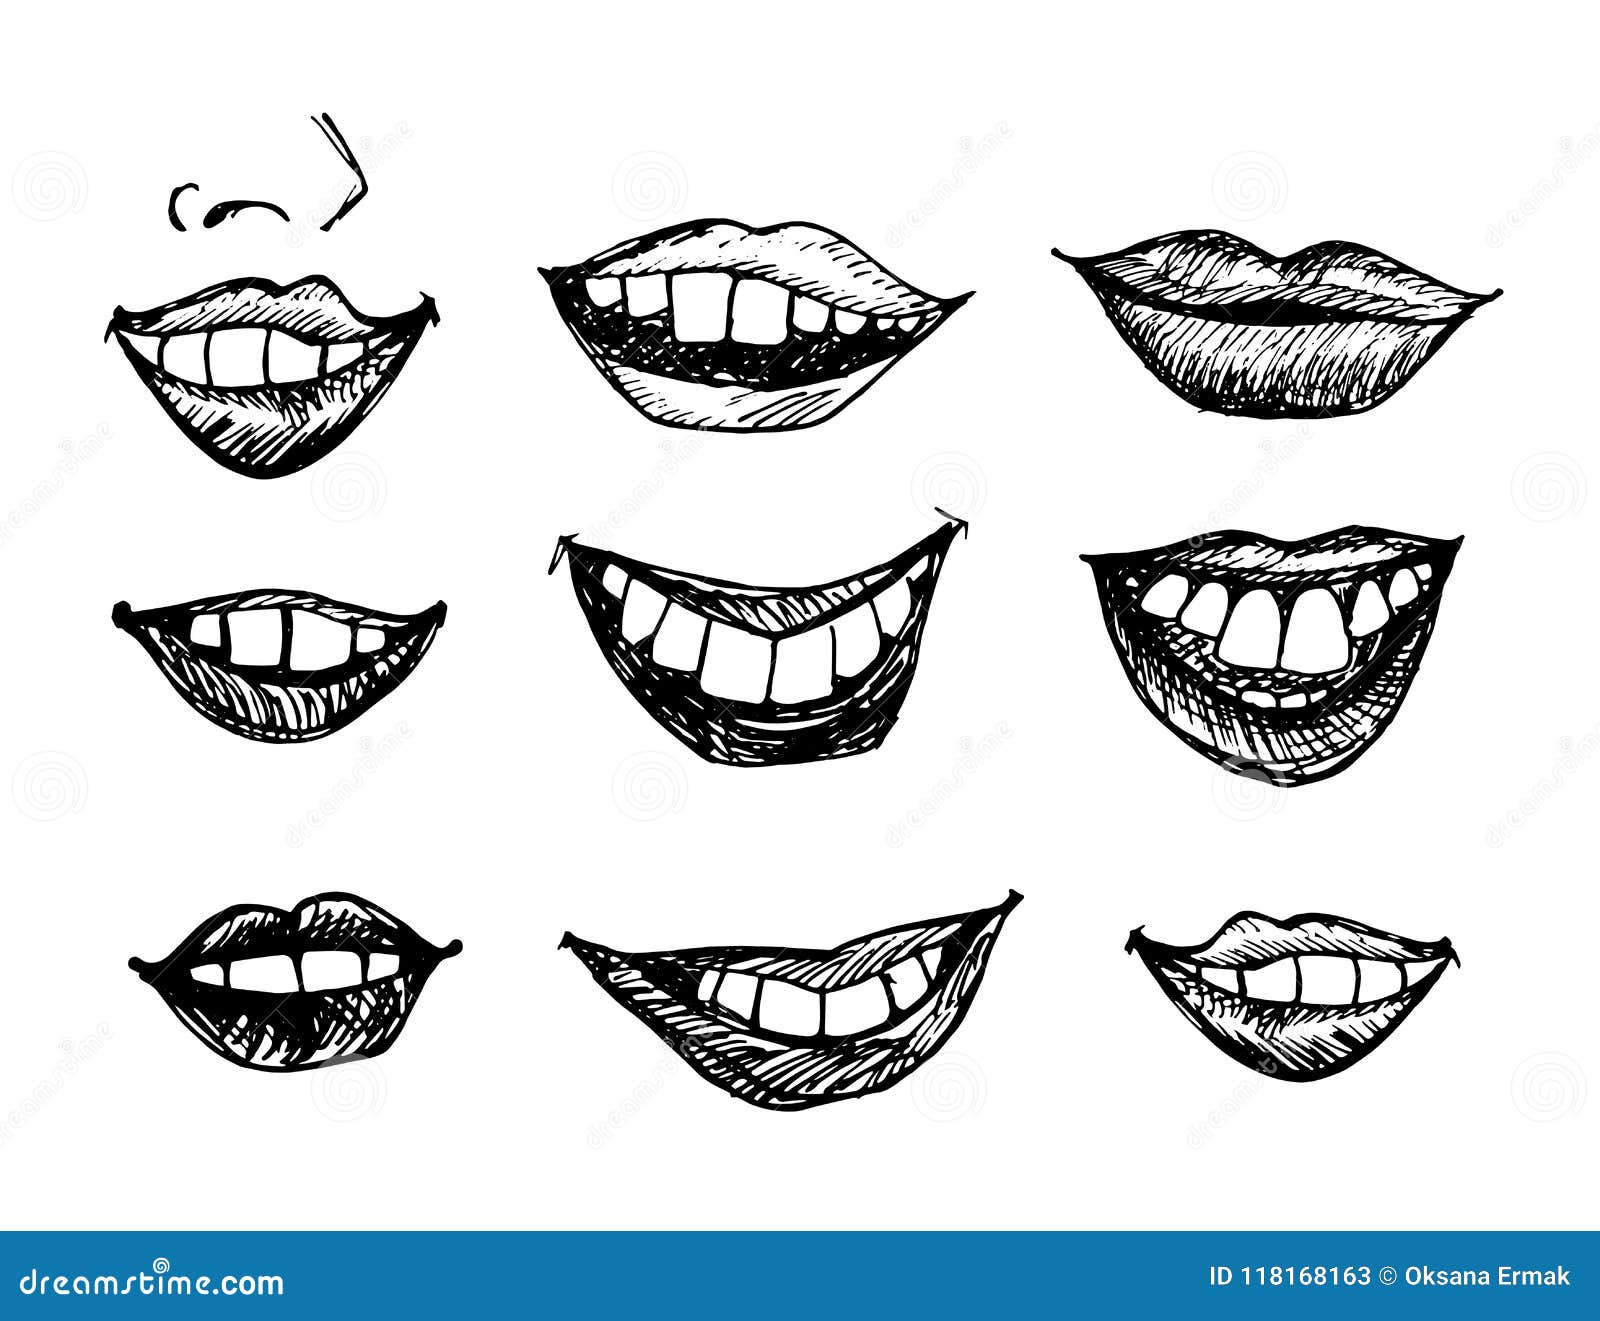 10876 Smiling Lips Sketch Images Stock Photos  Vectors  Shutterstock